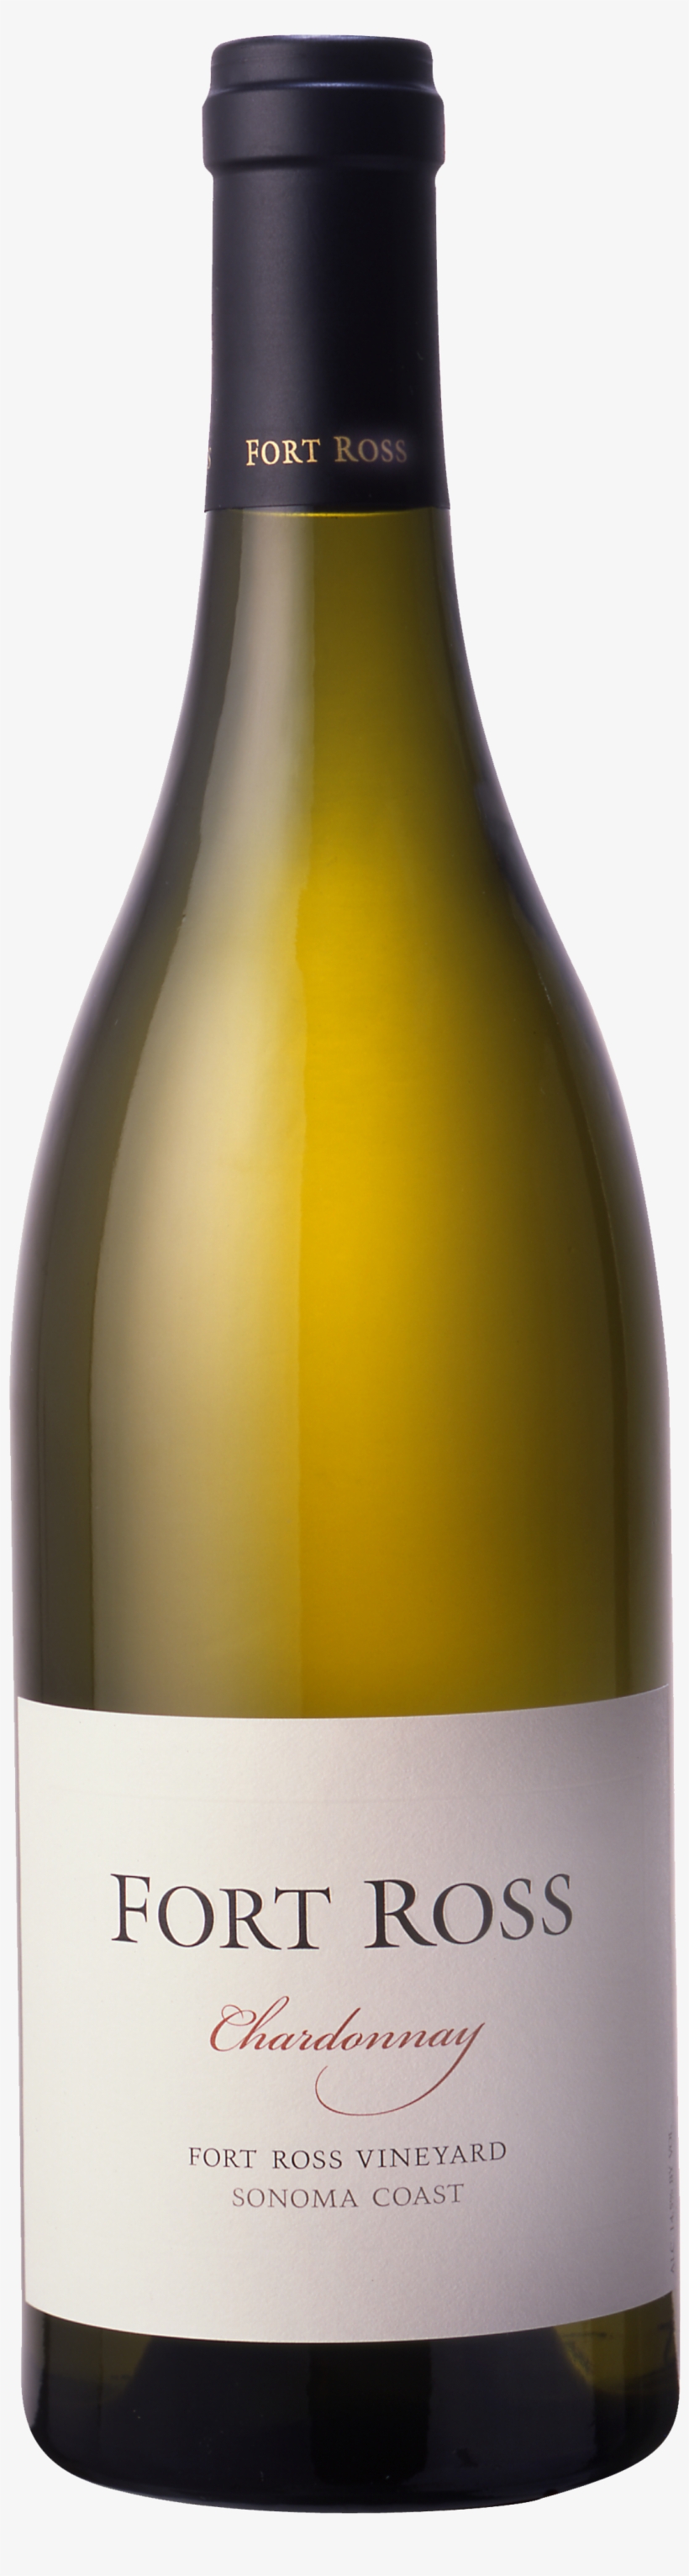 Bottle Silhouette - Fort Ross Chardonnay, transparent png #9020243